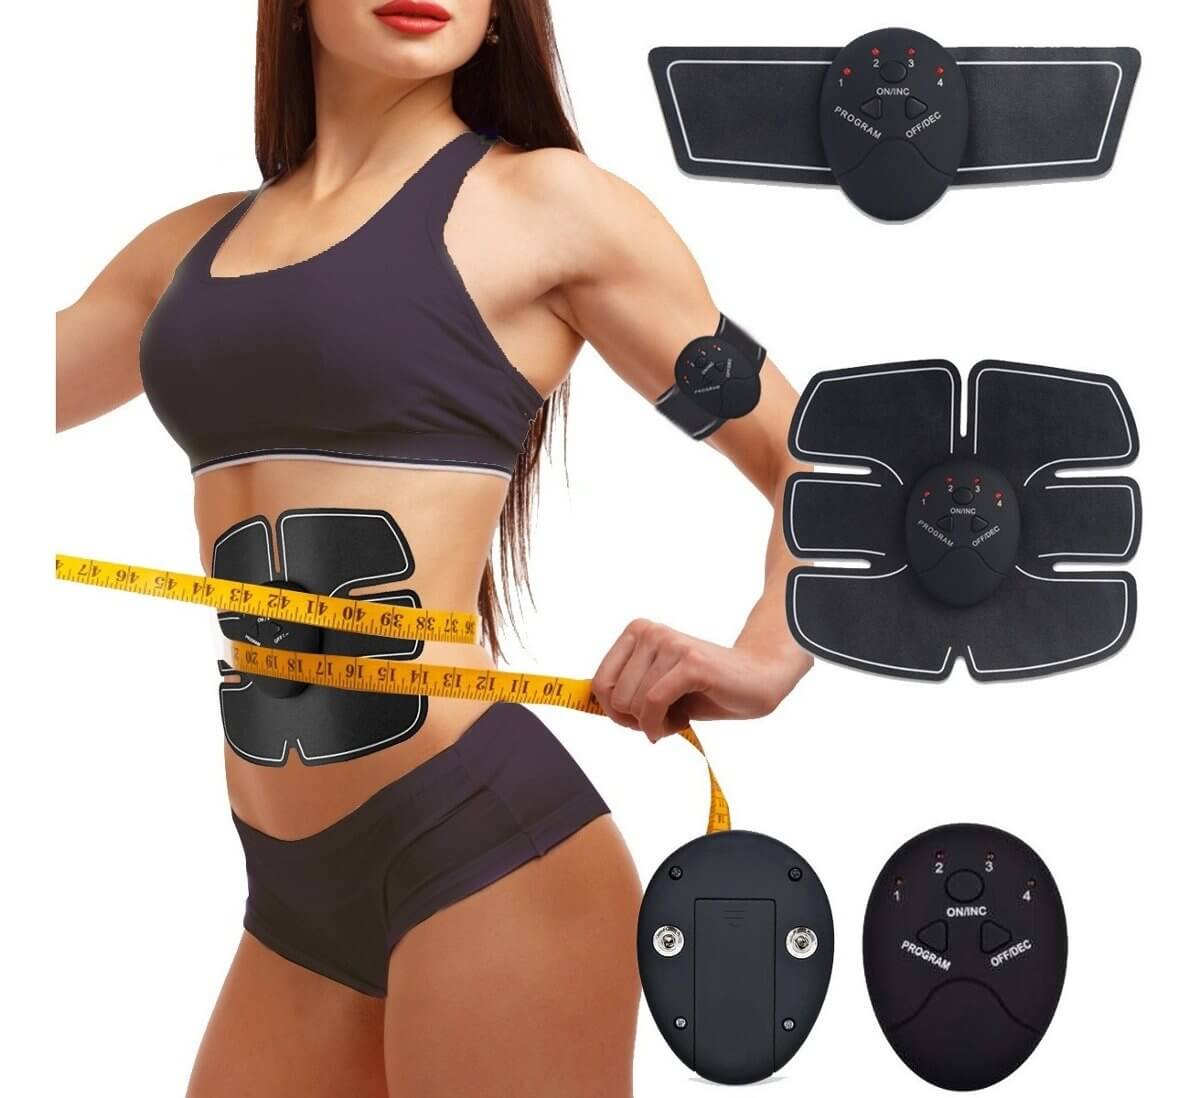 Electroestimulador Muscular Smart Fitness Body 5 En 1. PERUMASSAGE